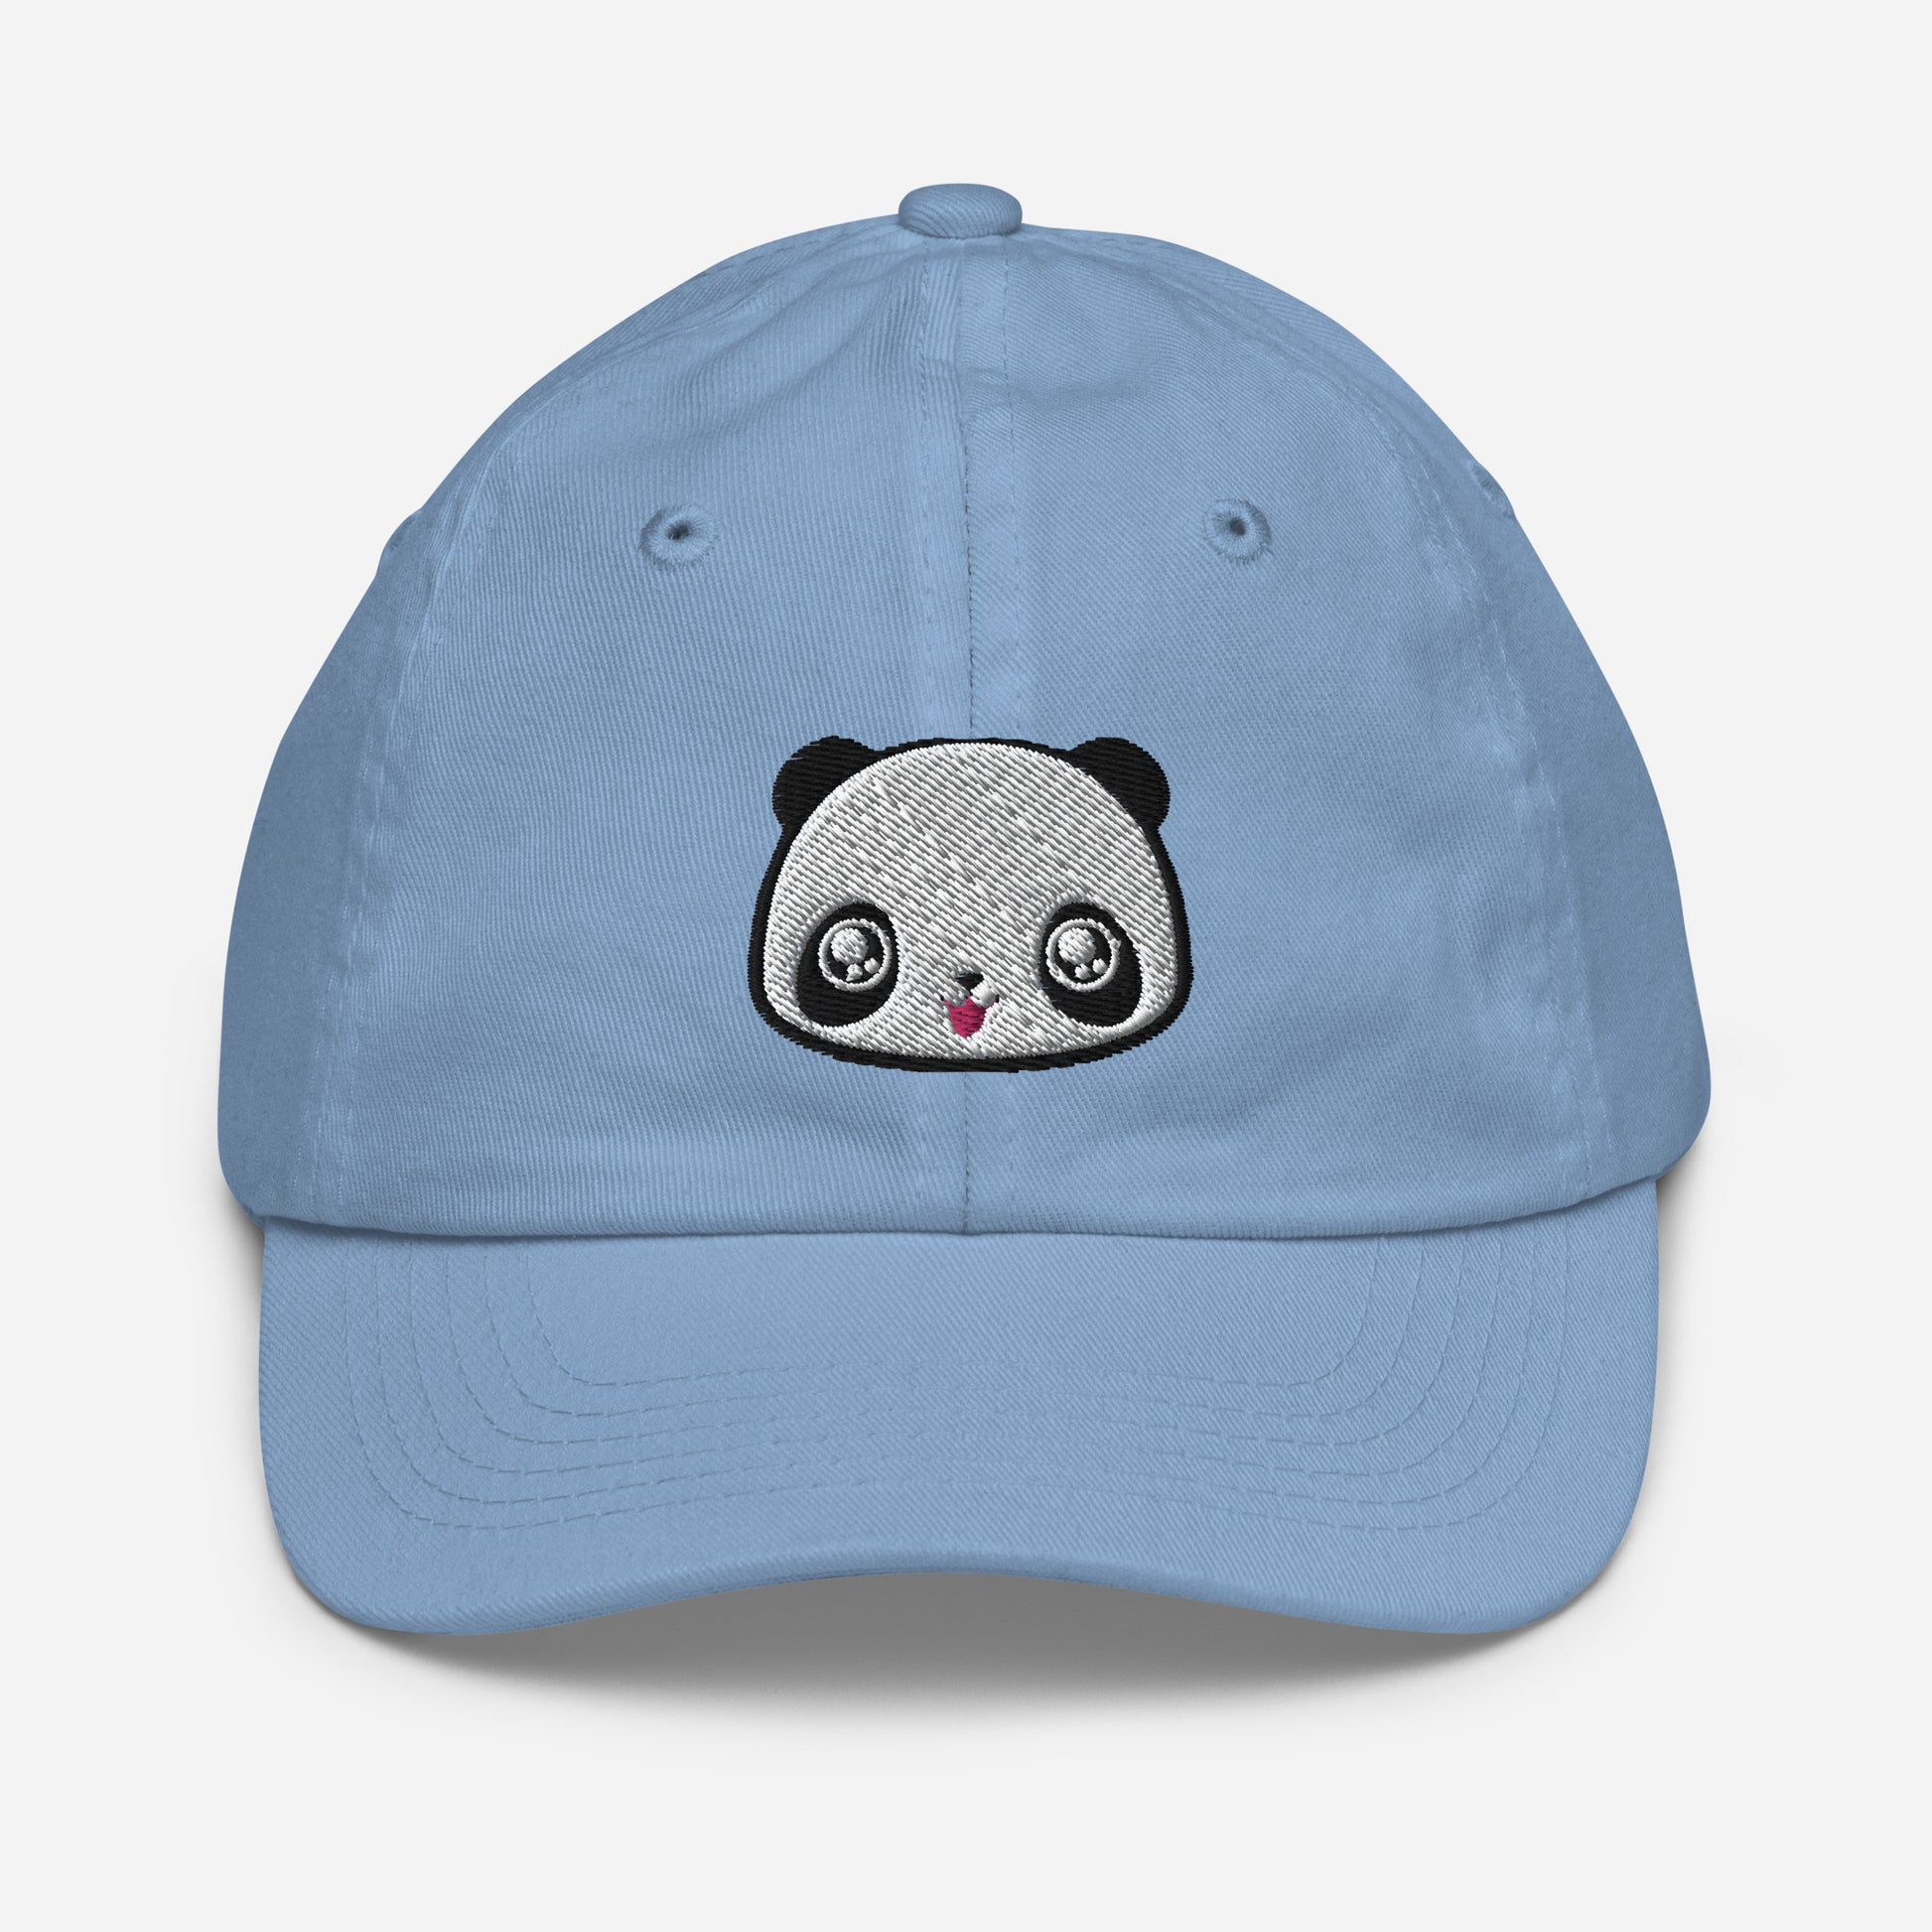 Baby blue baseball cap with print of panda head